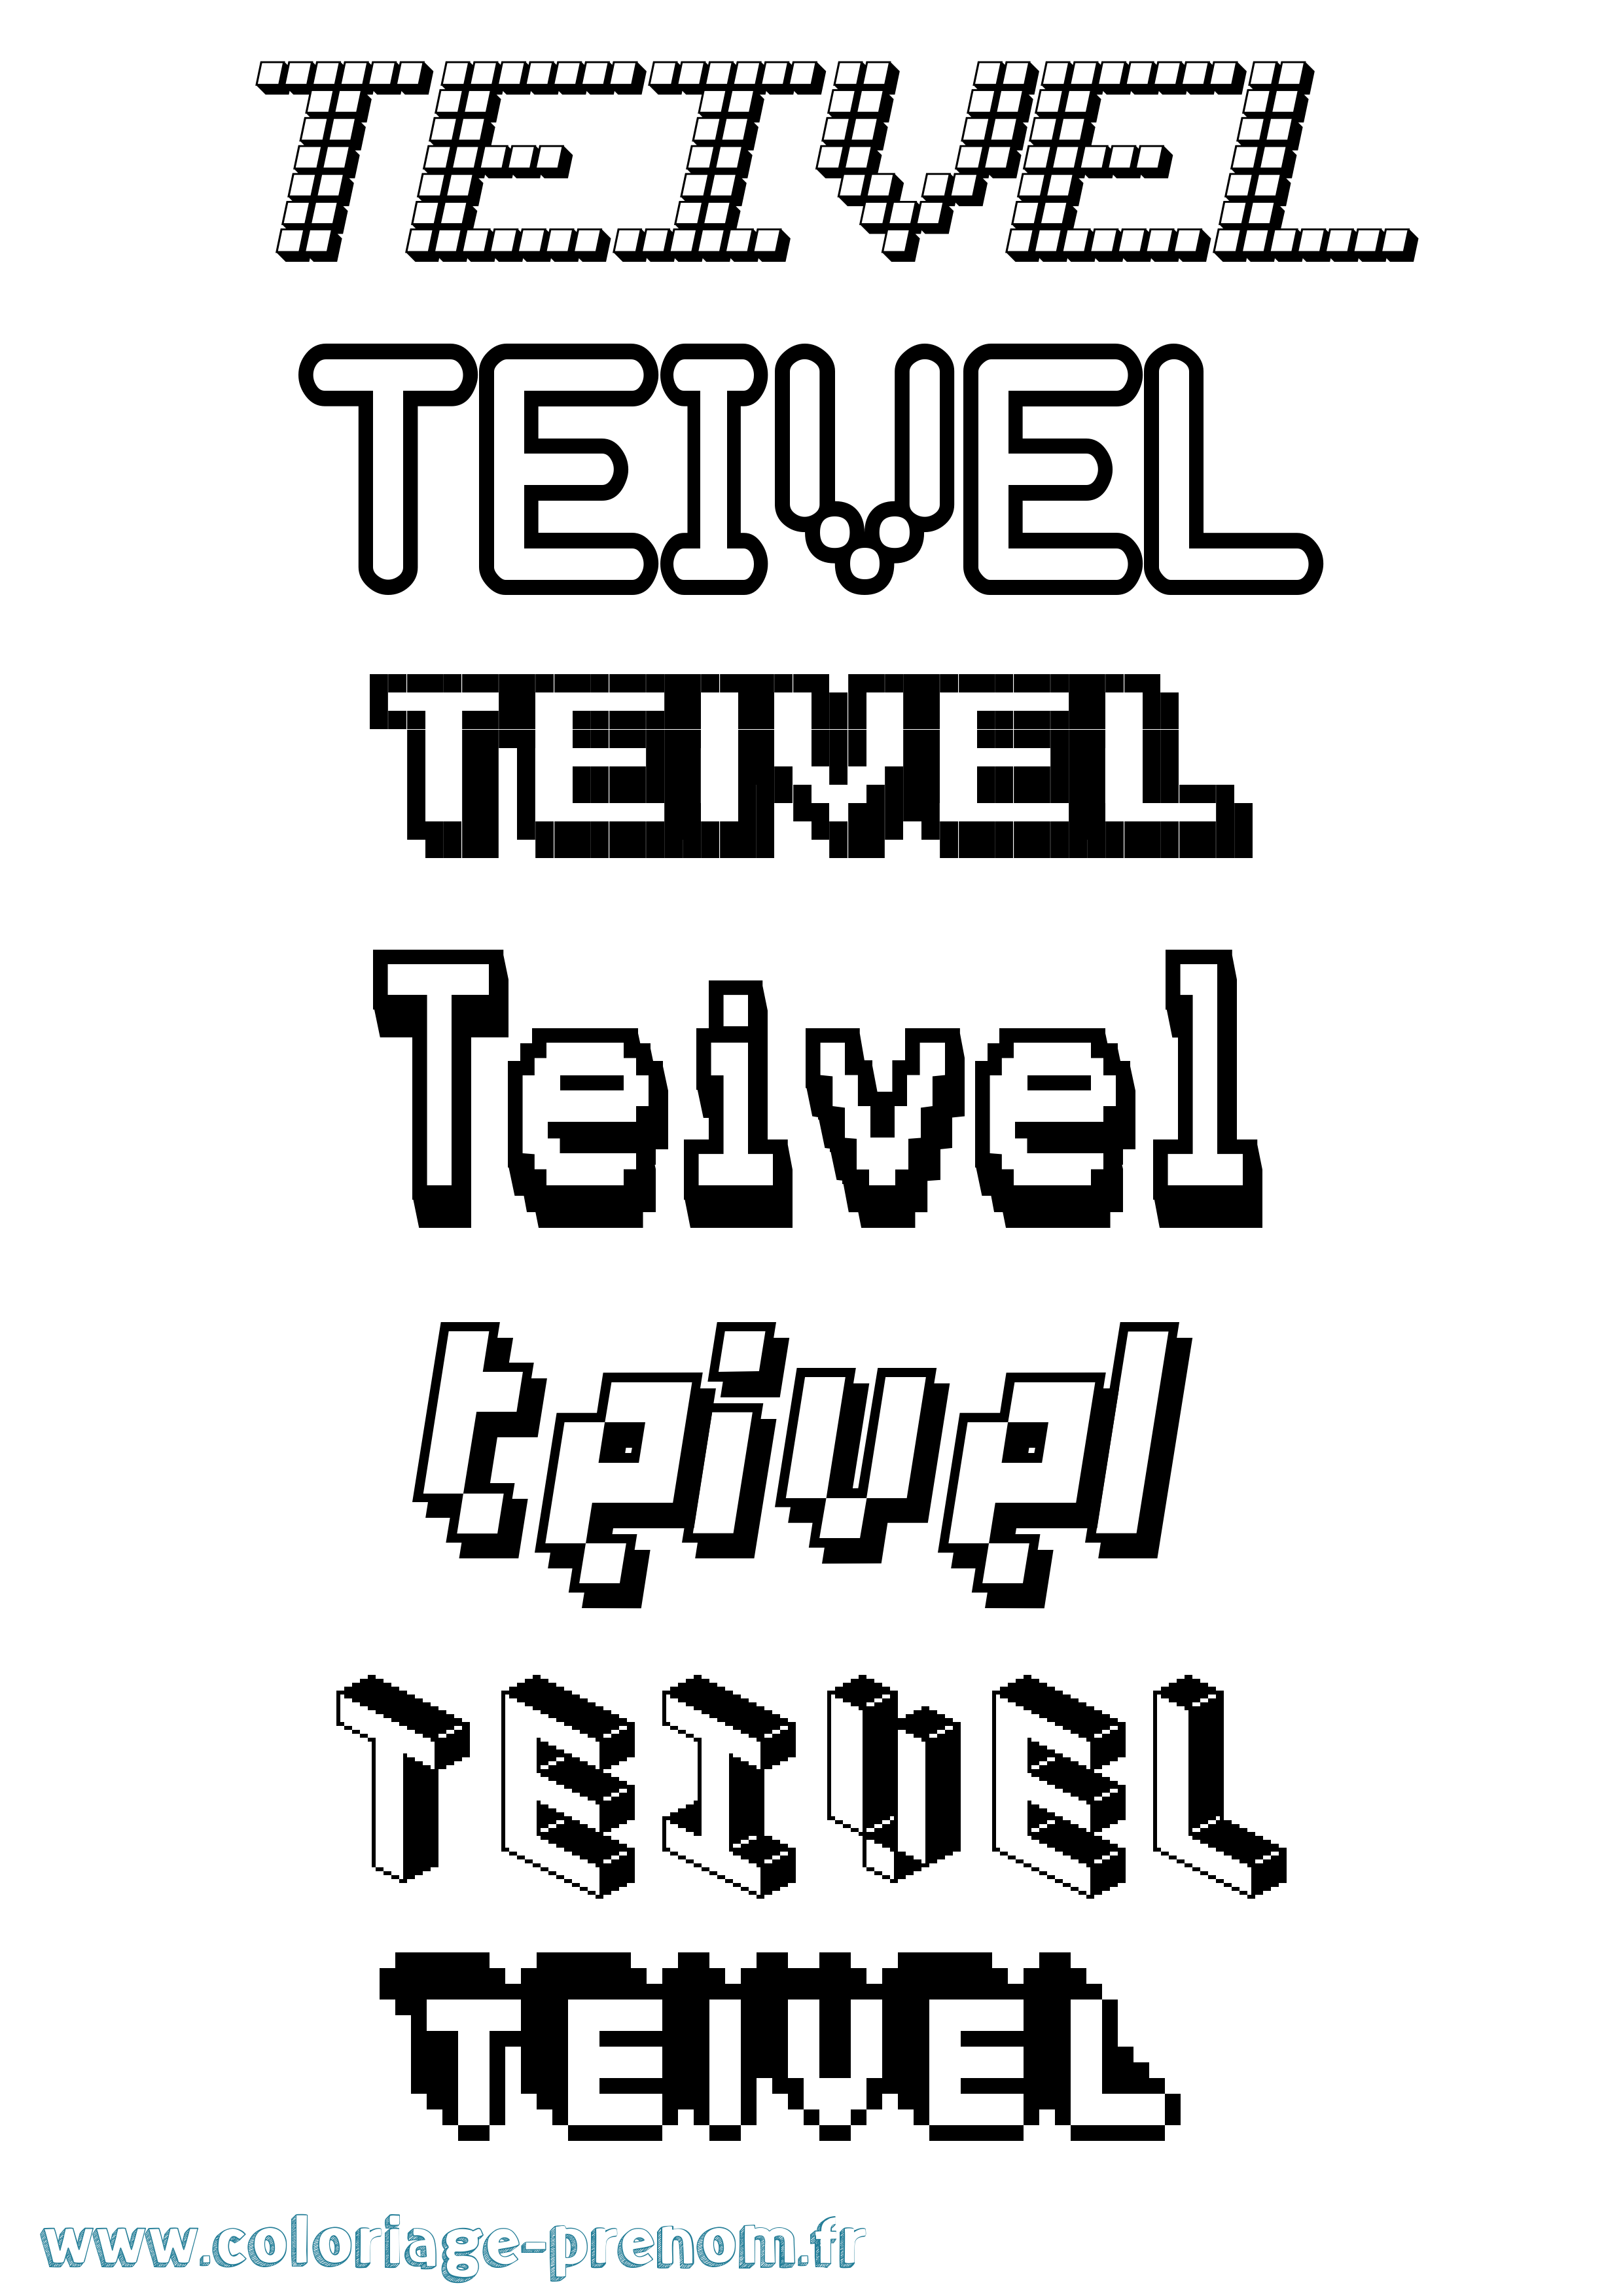 Coloriage prénom Teivel Pixel